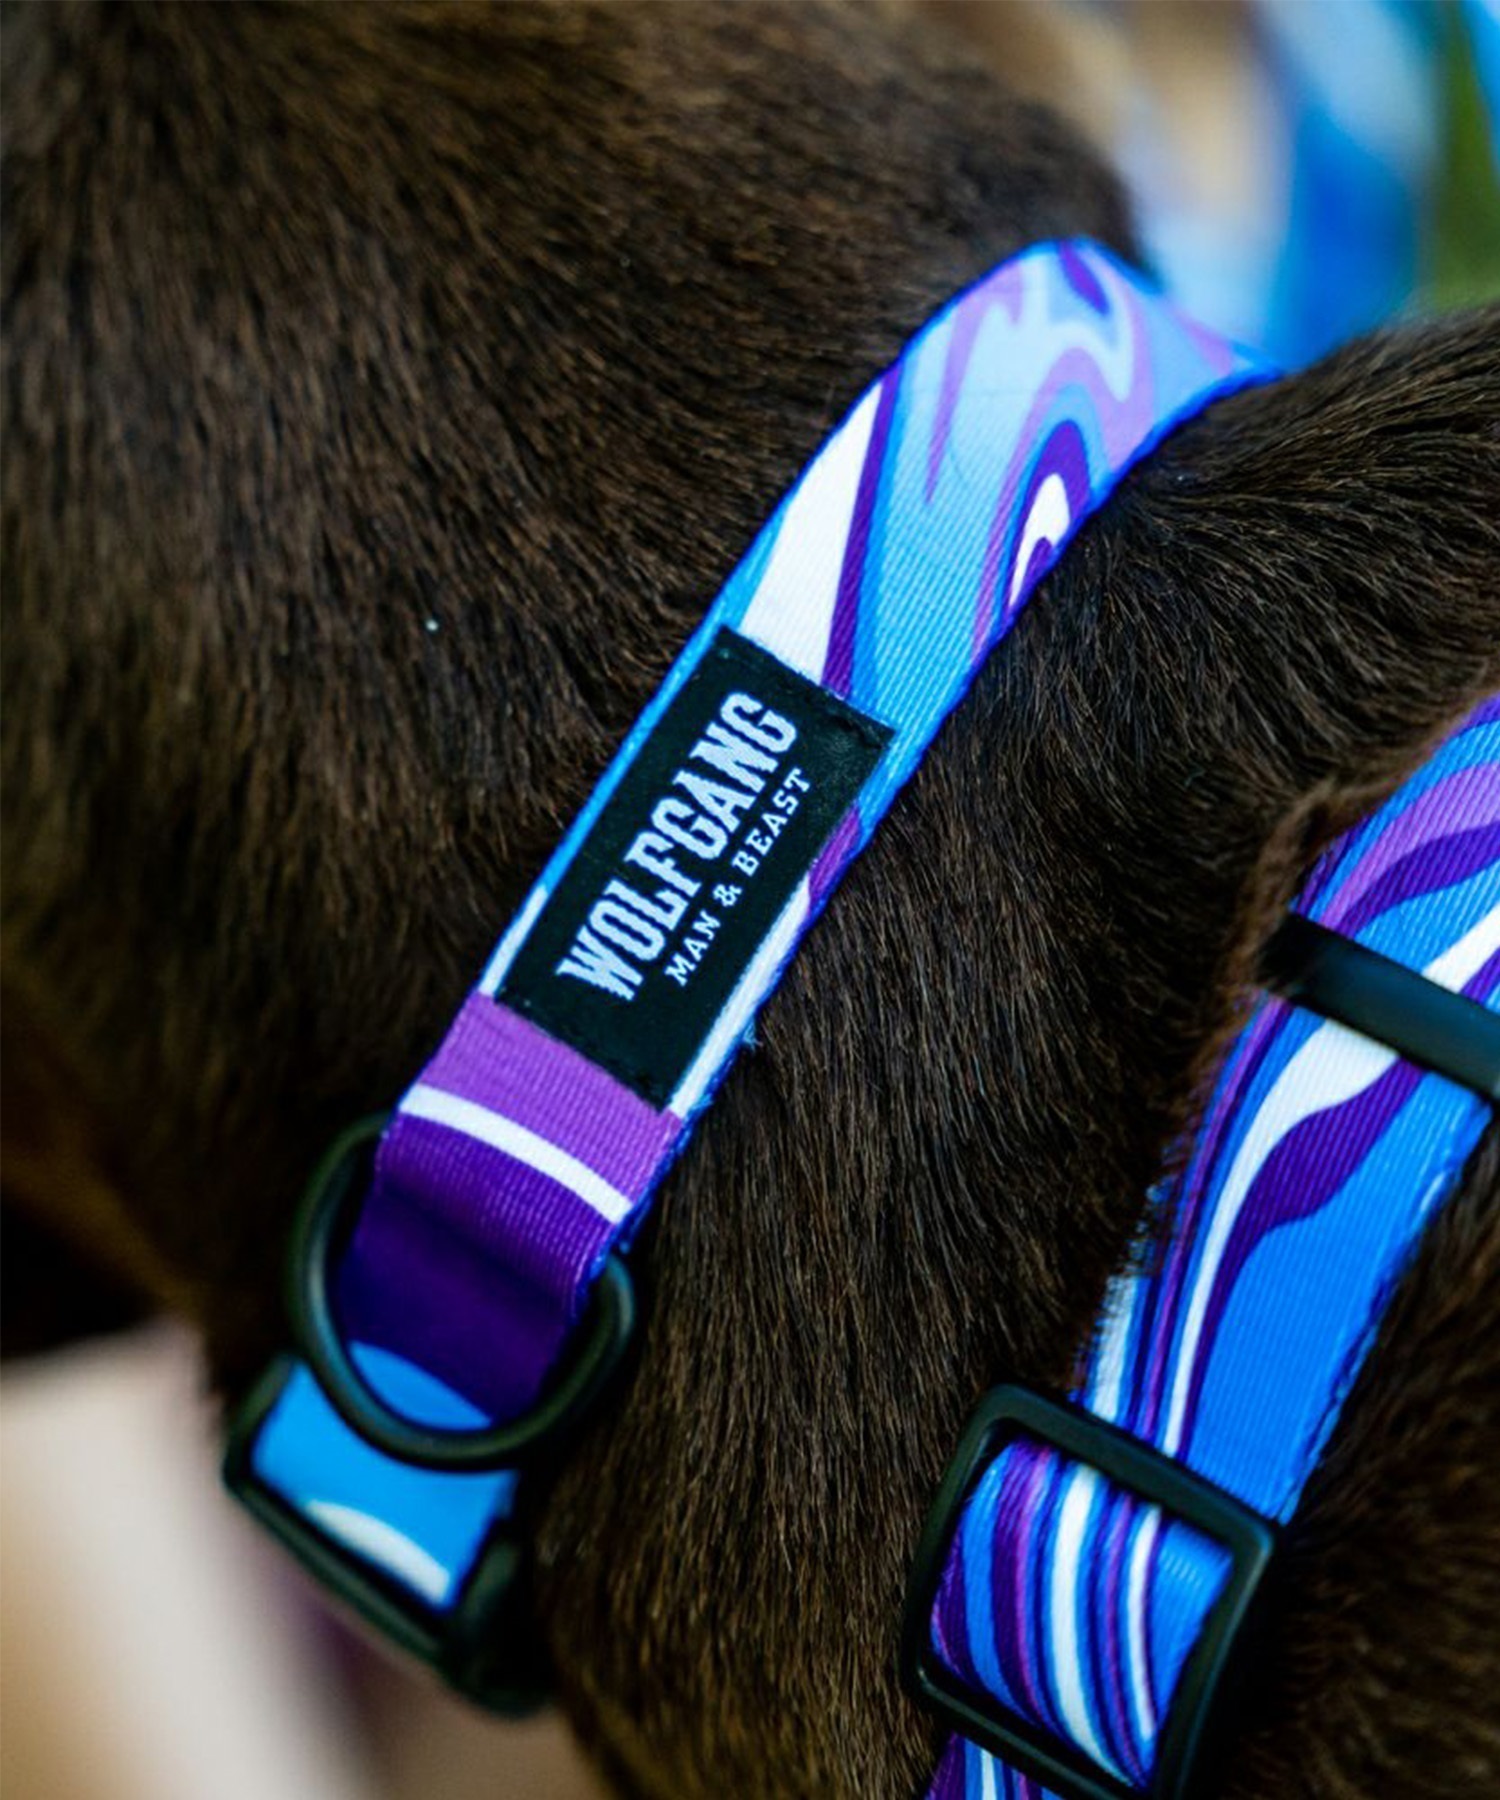 WOLFGANG ウルフギャング 犬用 首輪 MarbleWave Collar Sサイズ 超小型犬用 小型犬用 マーブルウェイブ カラー ブルー系 WC-001-102(PU-S)